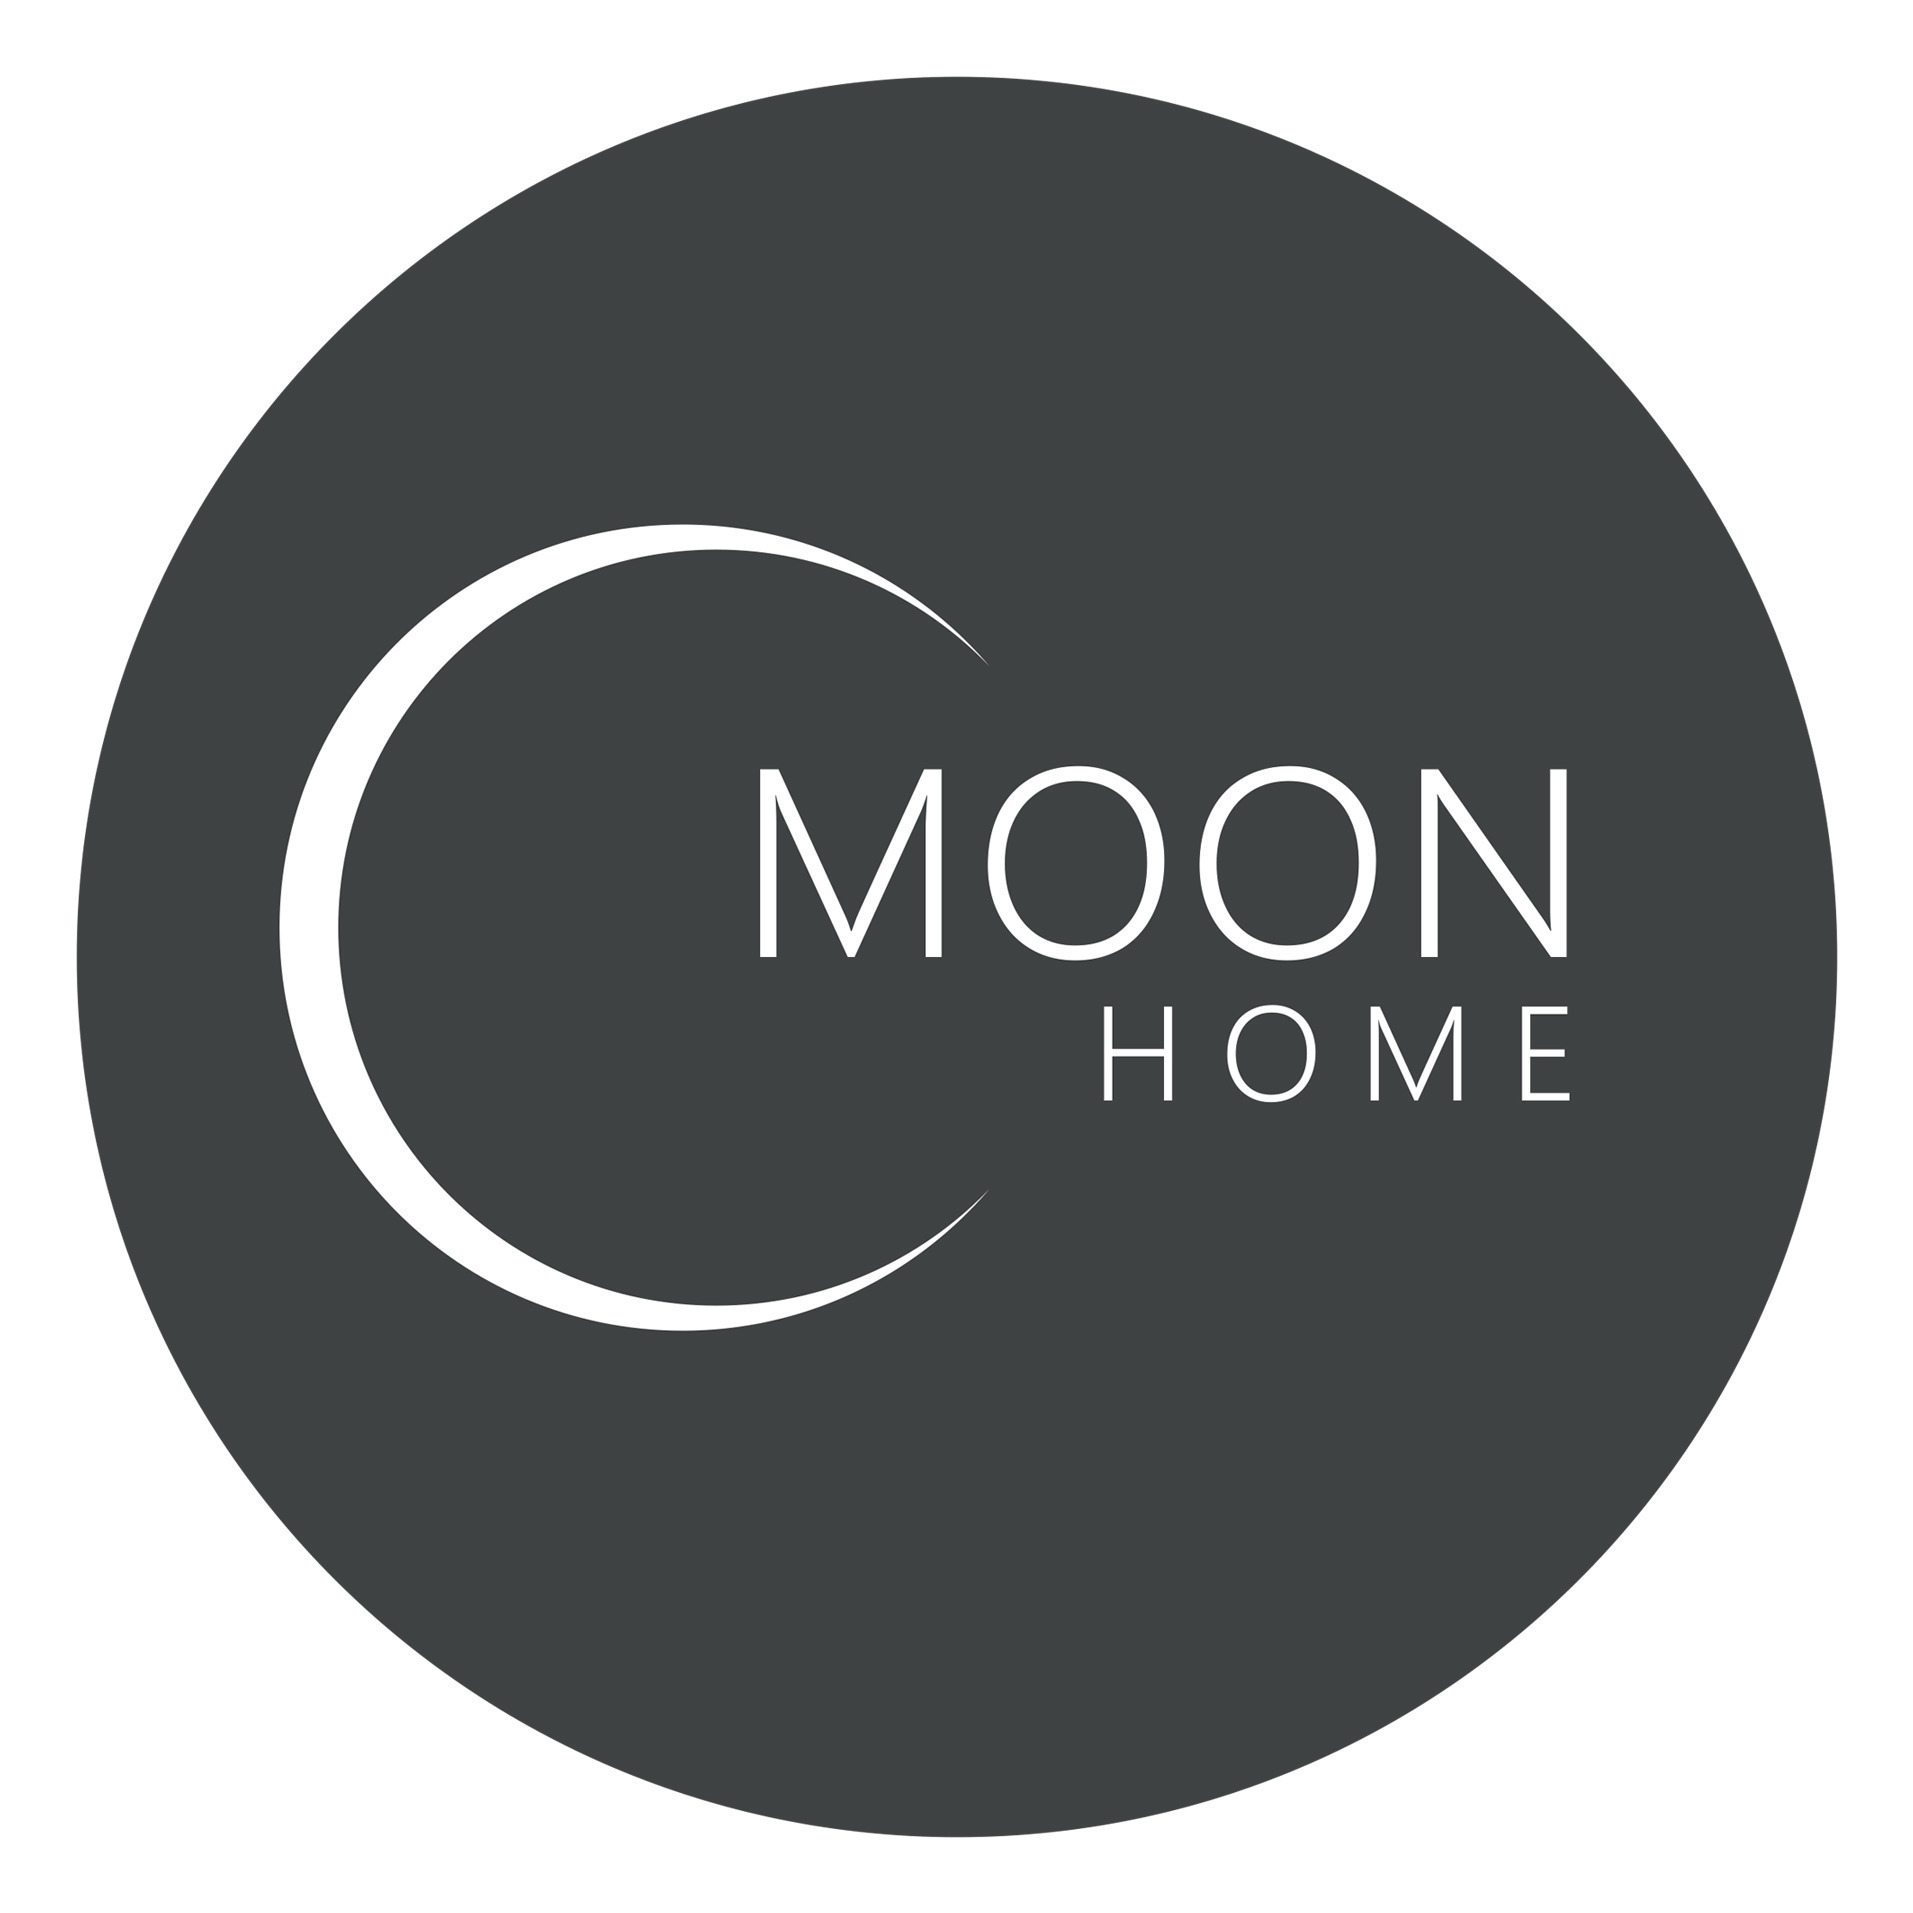 Homing moon. My Home Moon. Студия Moon Новосибирск. Moon Studio в Уфе. Студия Moon Севастополь.